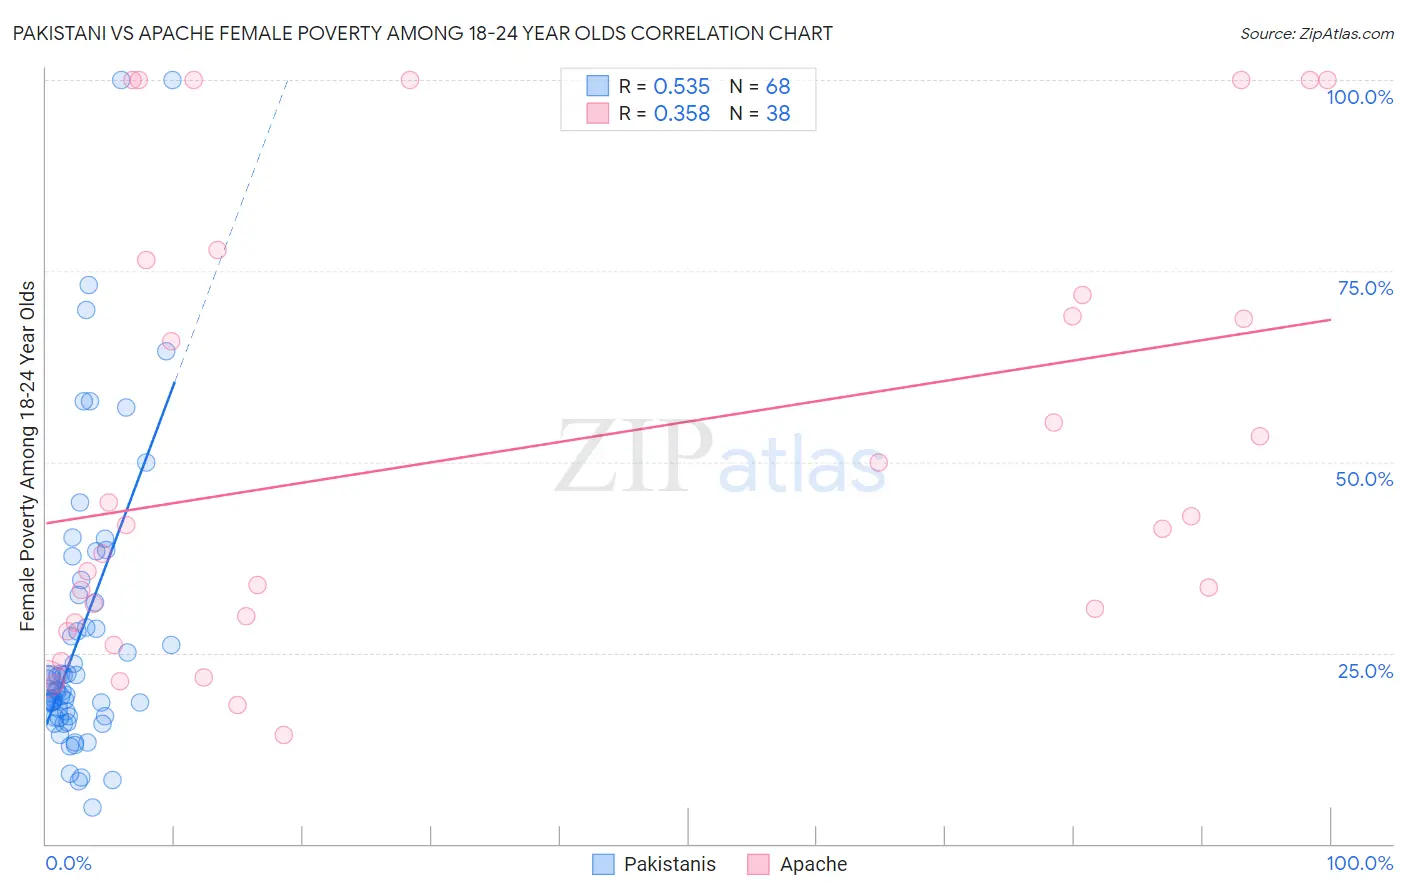 Pakistani vs Apache Female Poverty Among 18-24 Year Olds